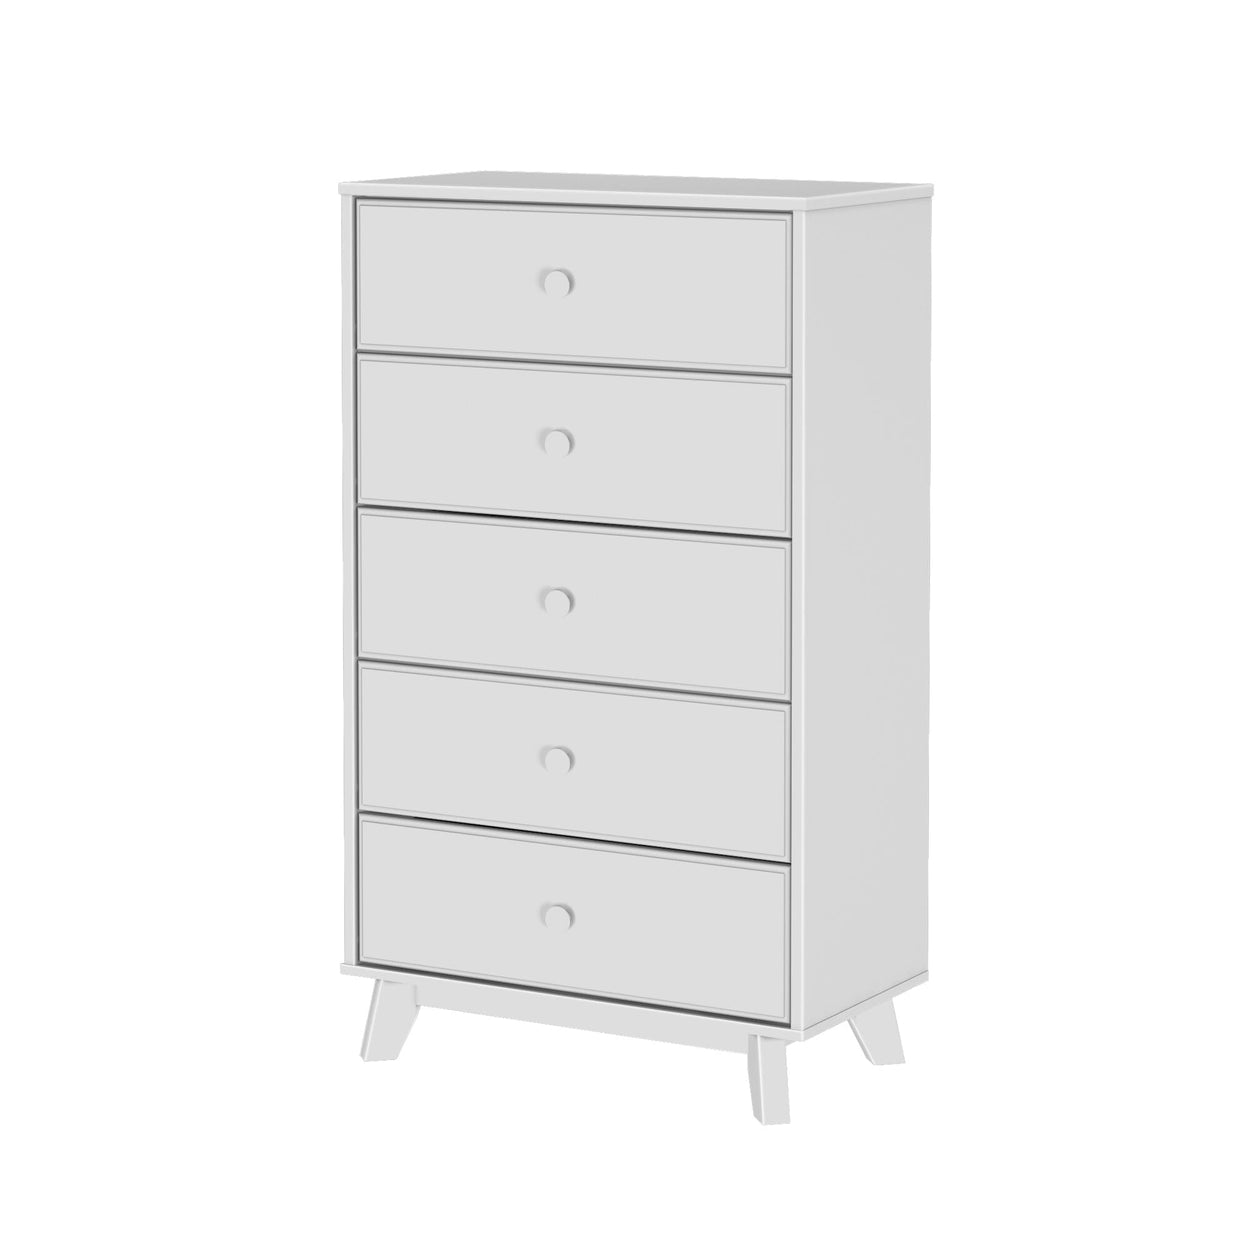 1800215000-002 : Furniture Max & Lily 5 Drawer Dresser, White